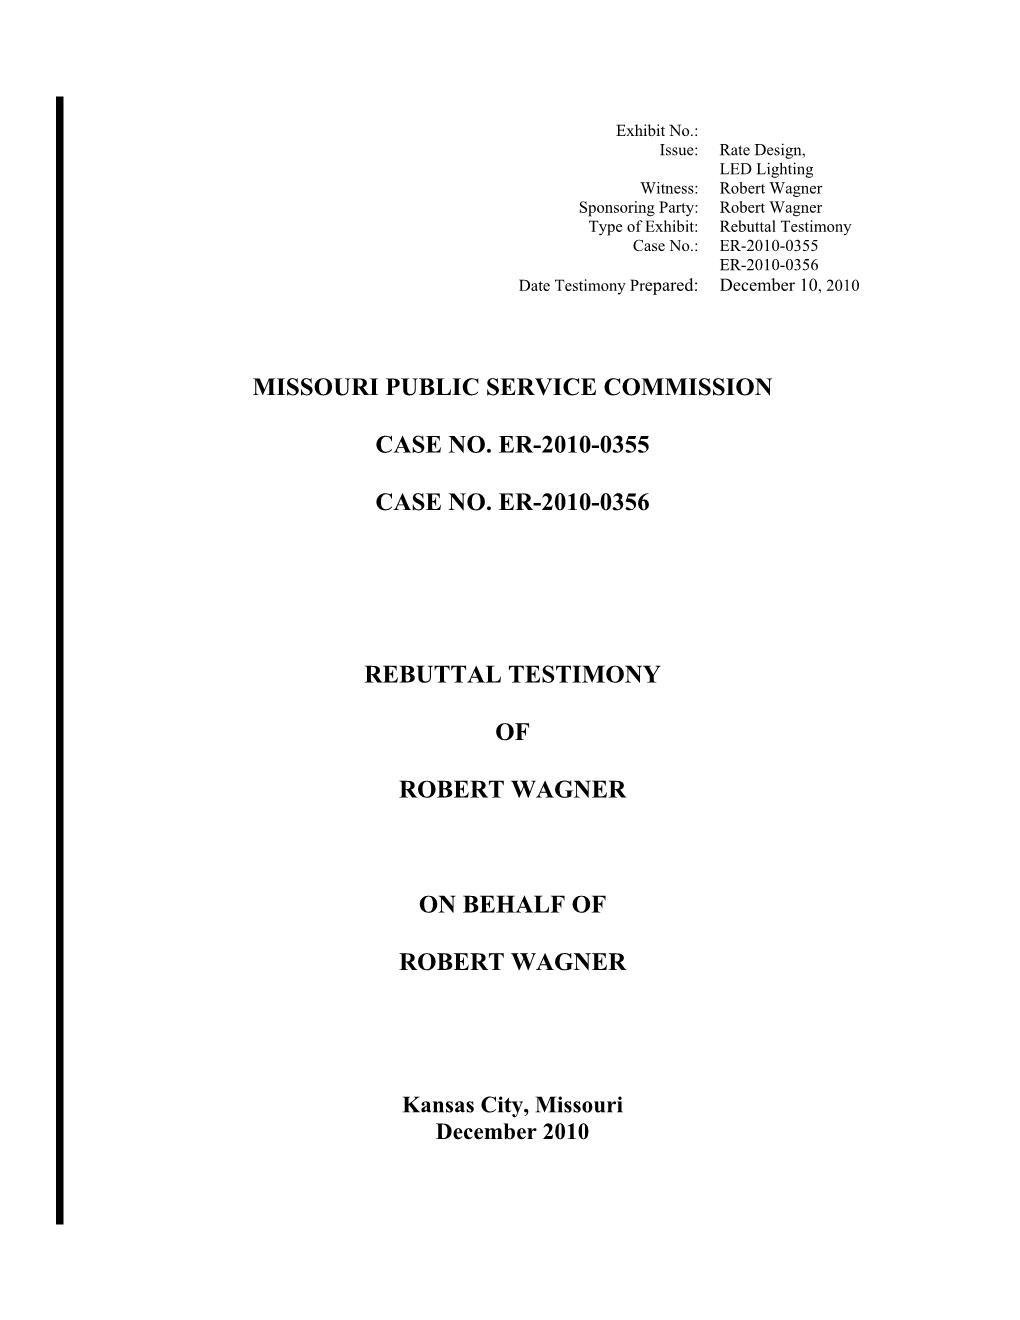 Rebuttal Testimony Case No.: ER-2010-0355 ER-2010-0356 Date Testimony Prepared: December 10, 2010